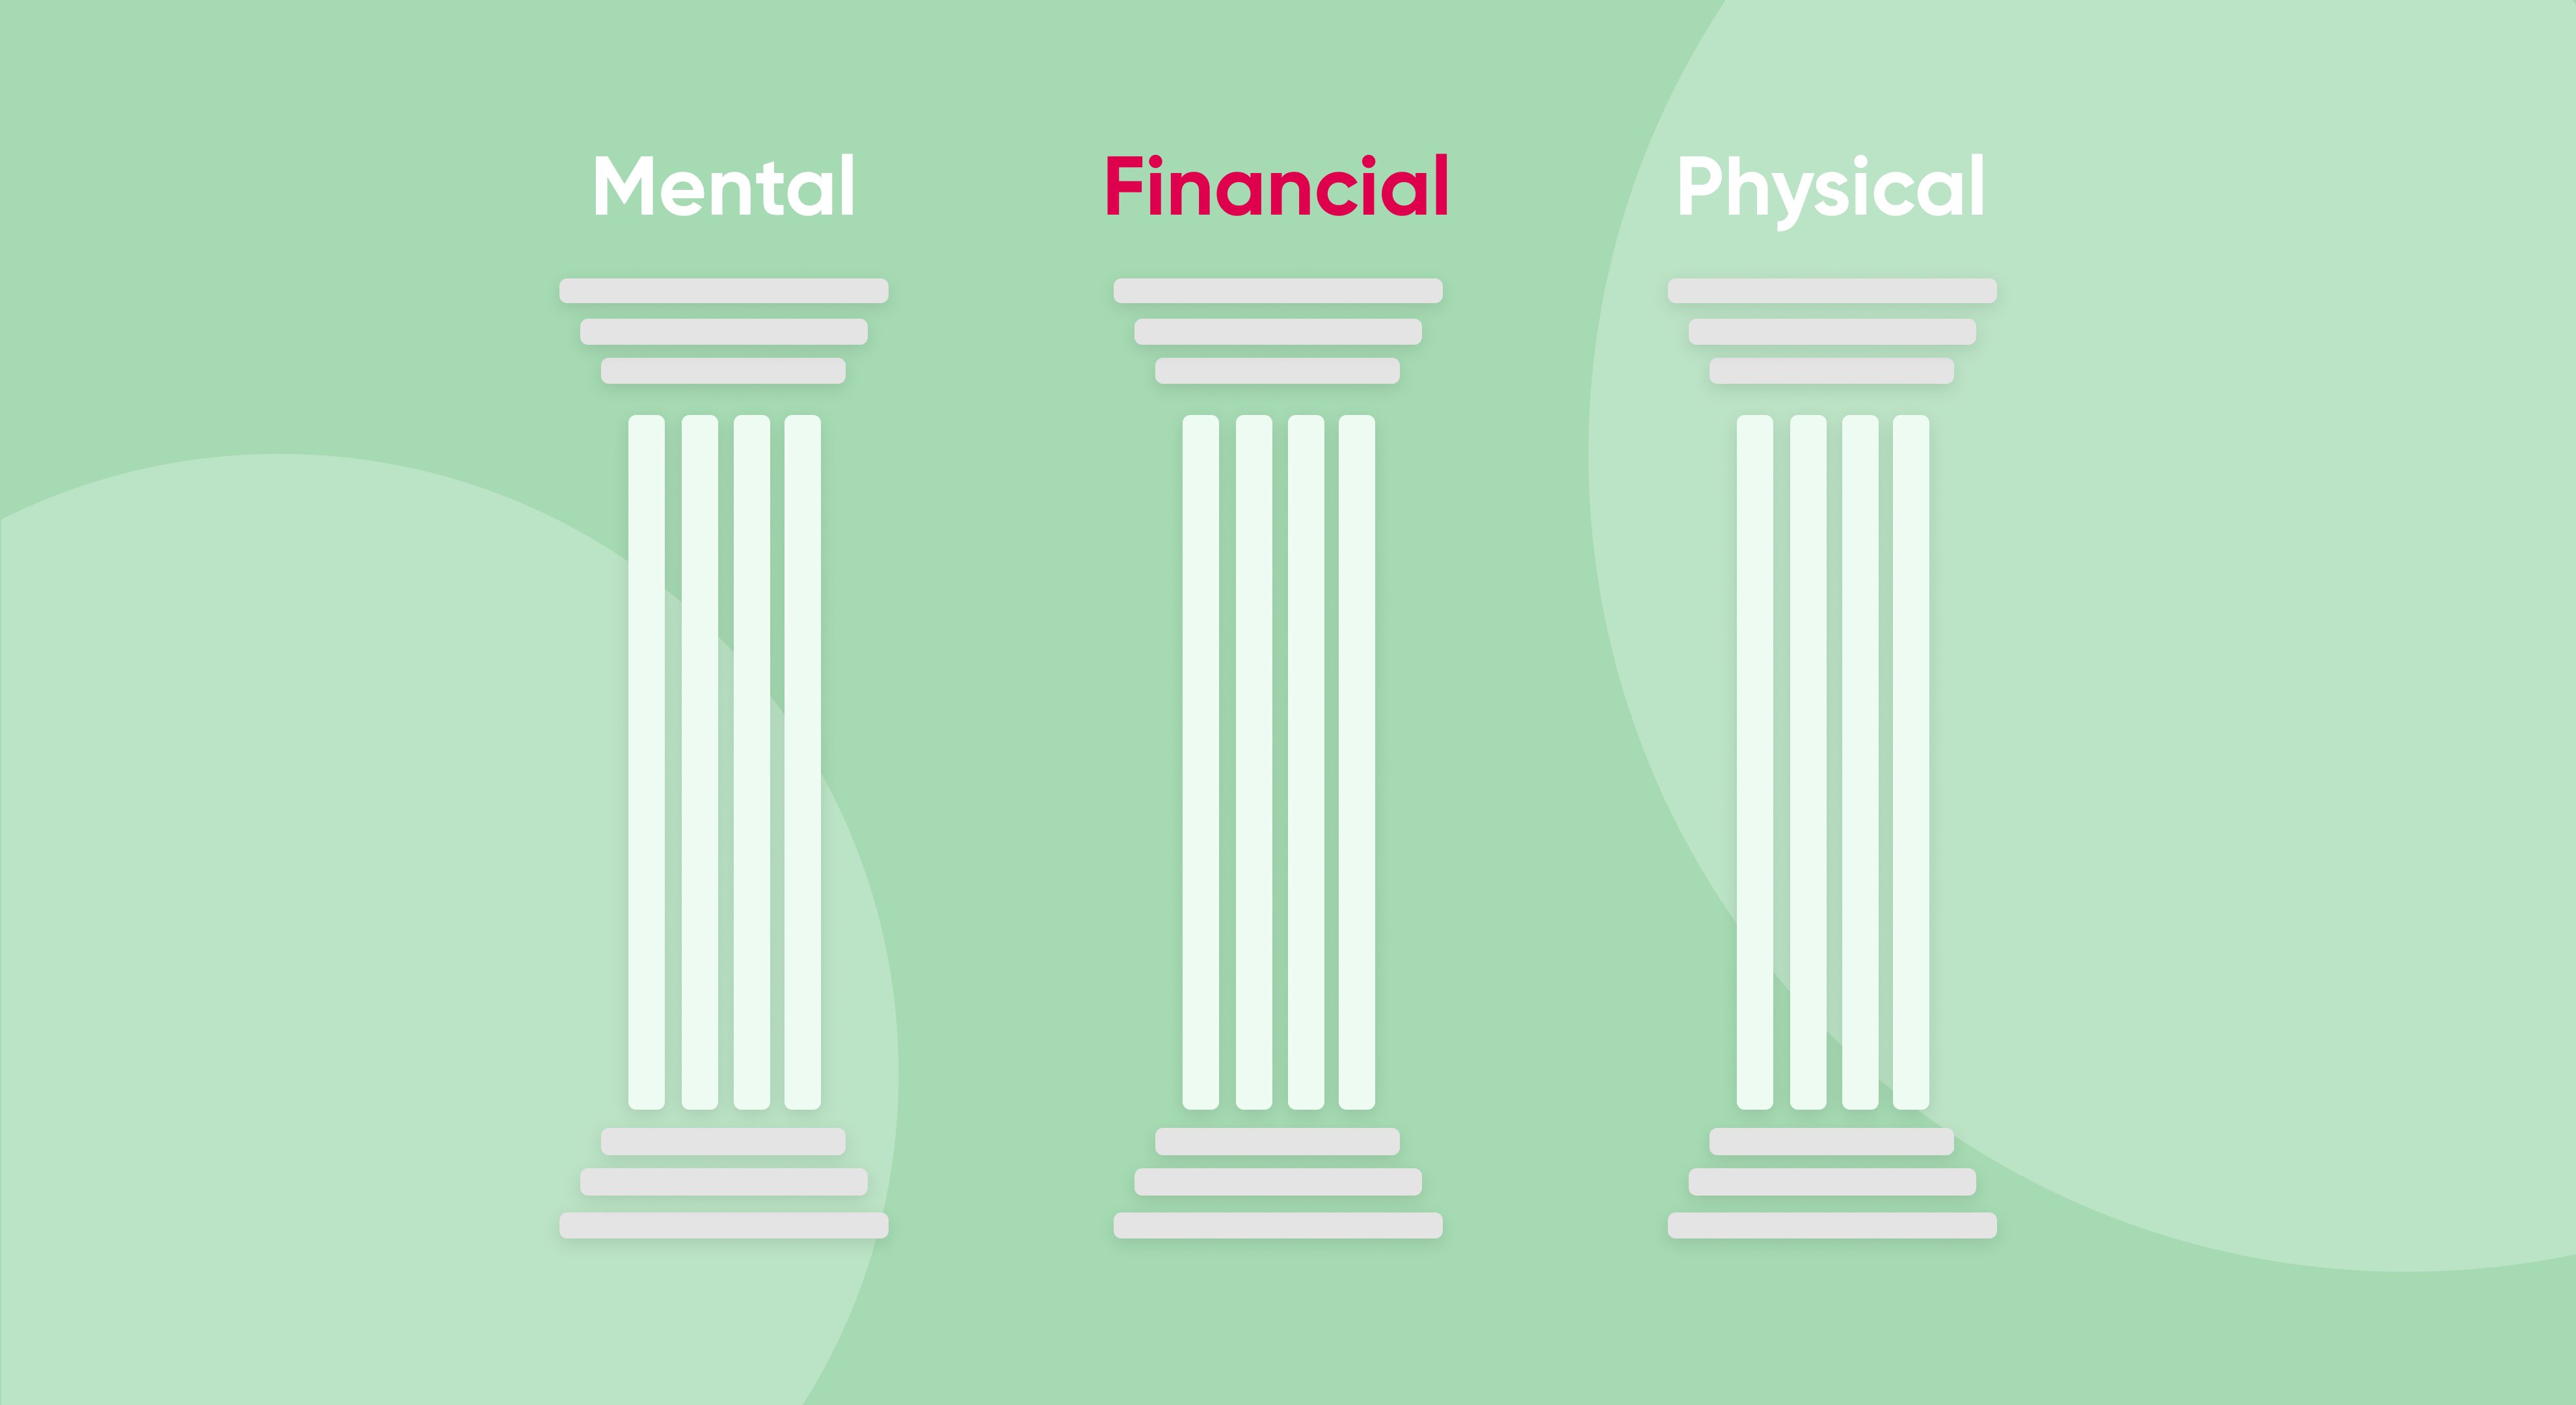 The 3 pillars of employee wellbeing